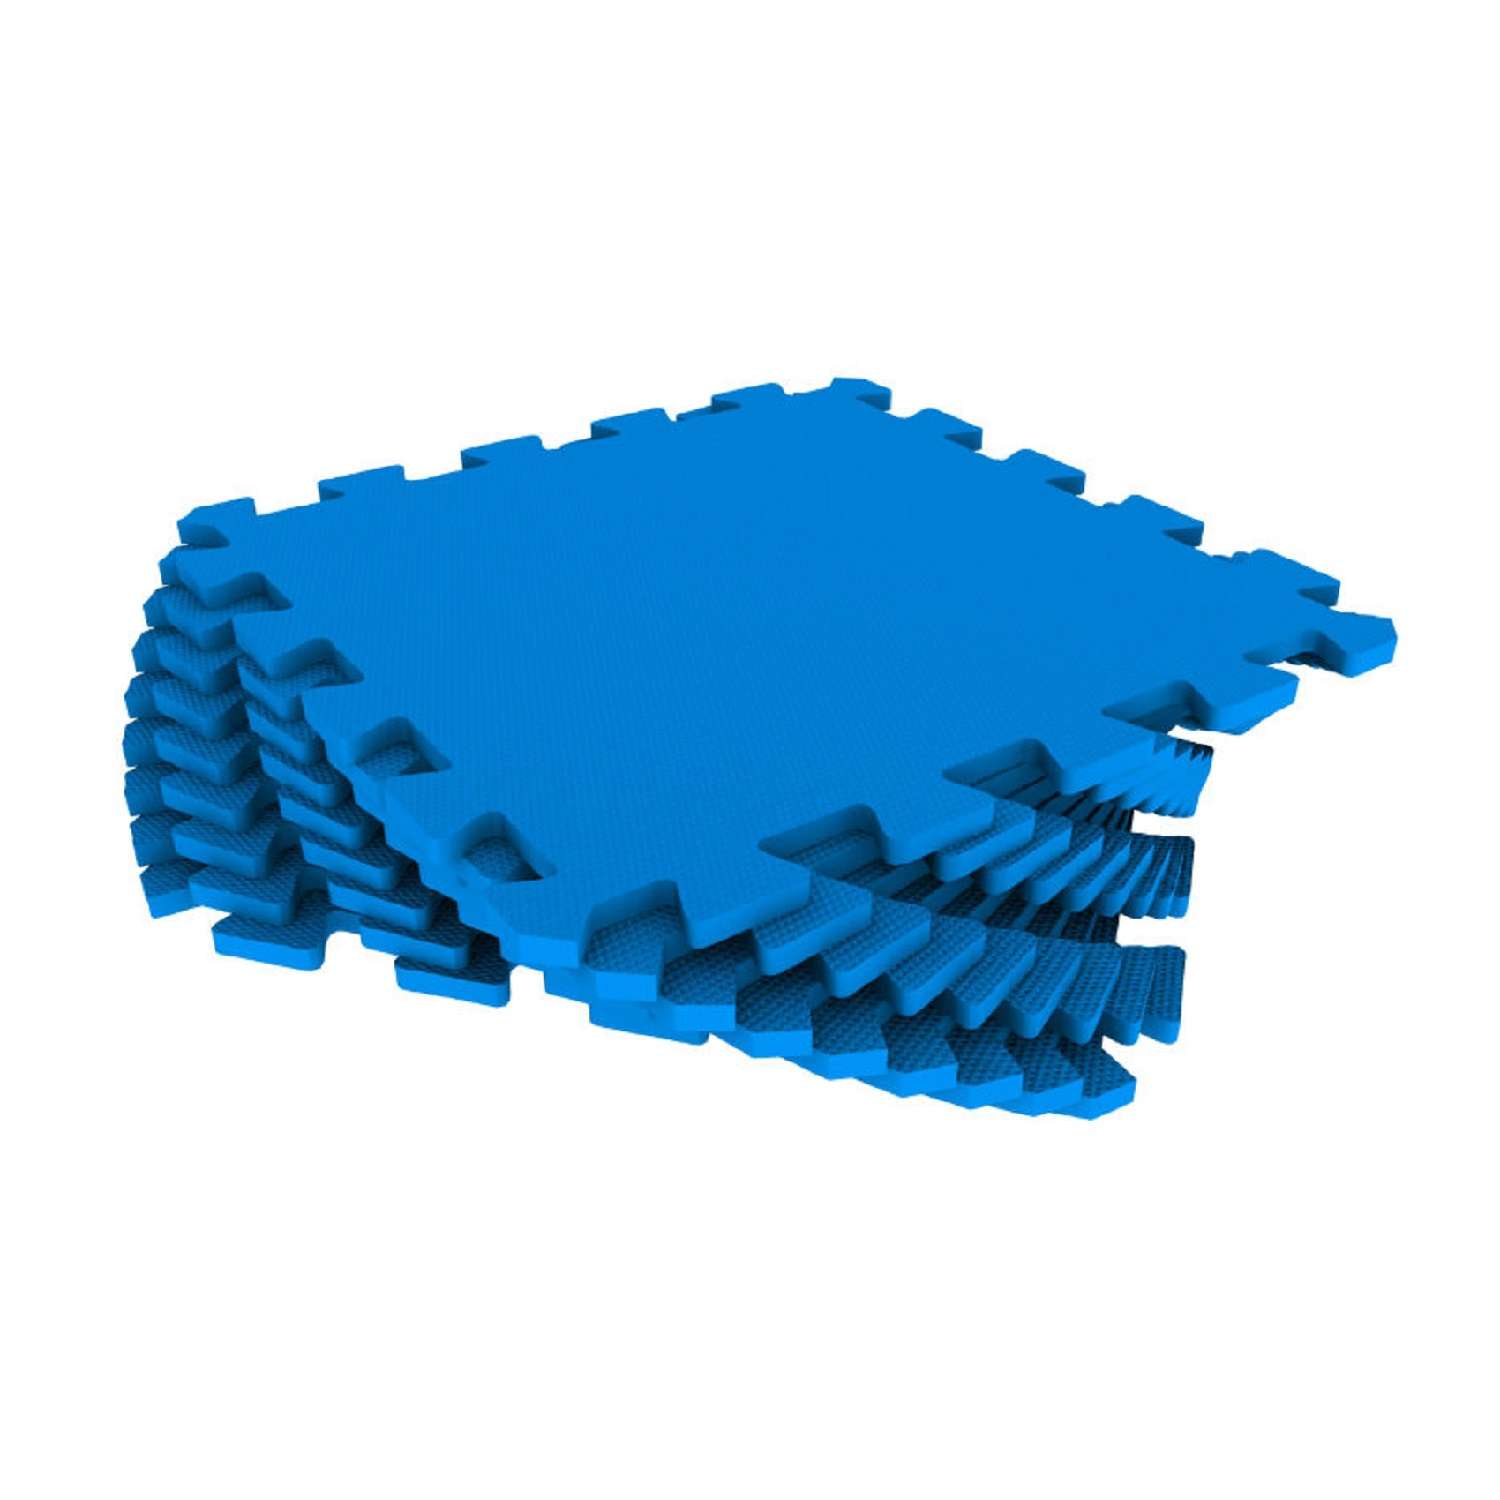 Развивающий детский коврик Eco cover мягкий пол для ползания синий 30х30 - фото 1